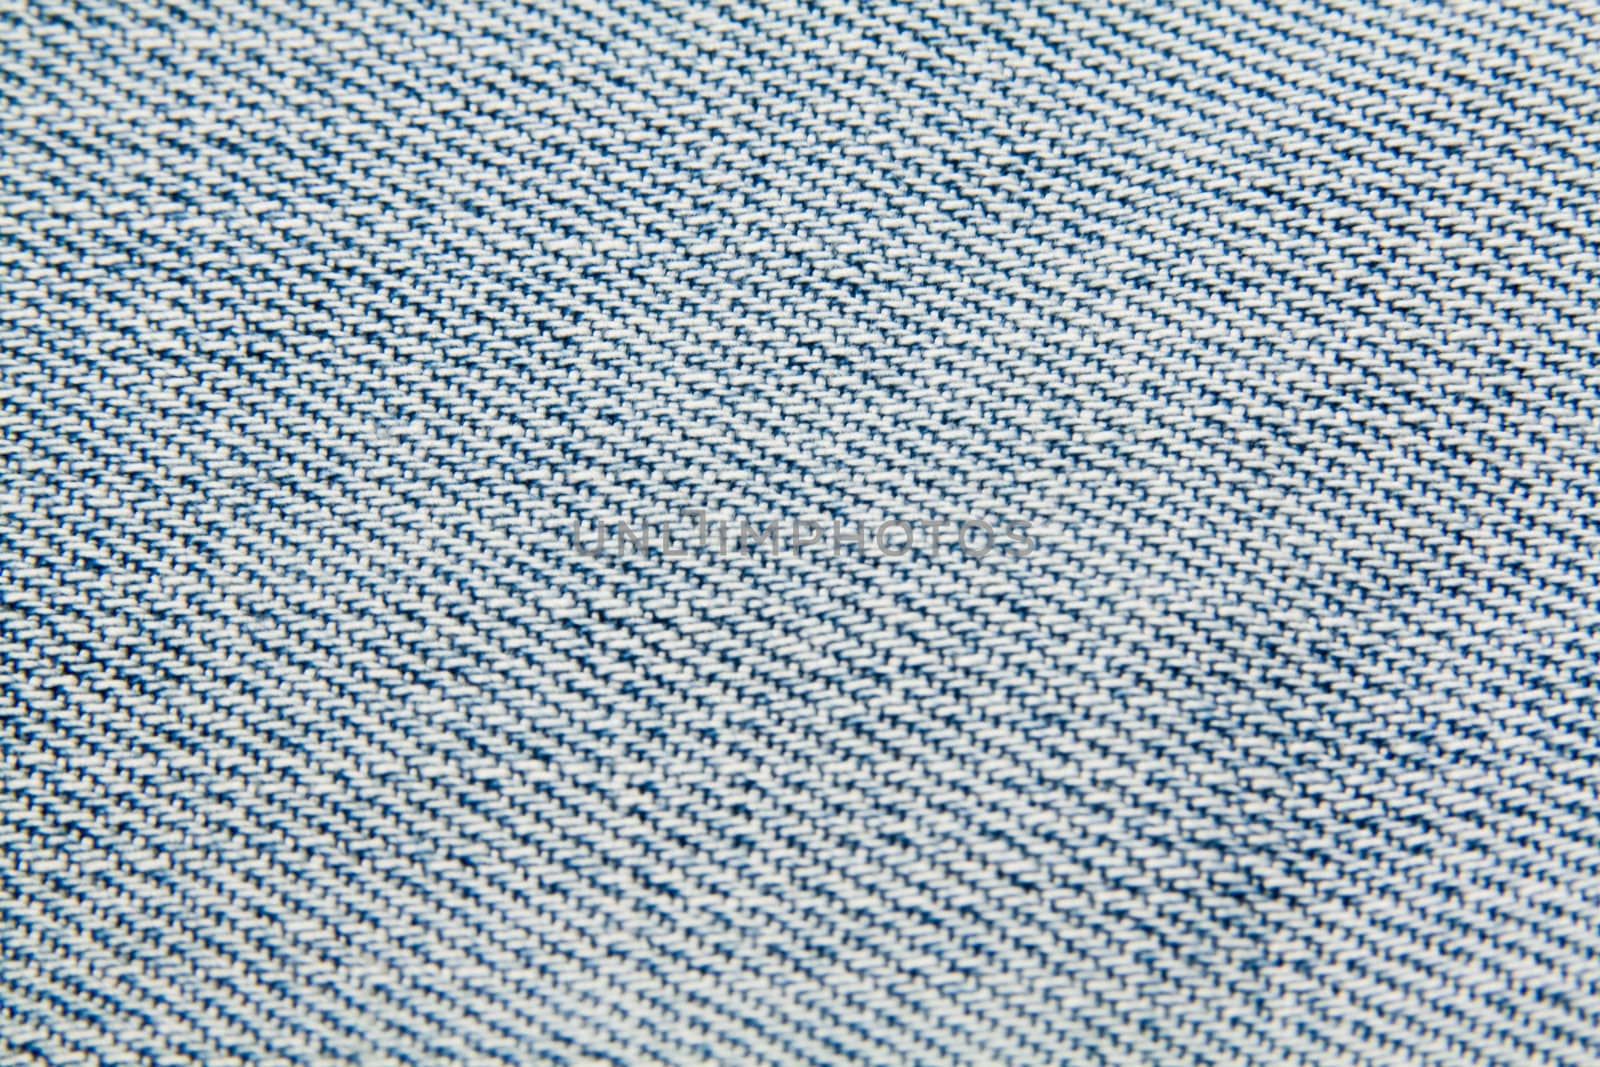 Close-up of blue jean material, denim